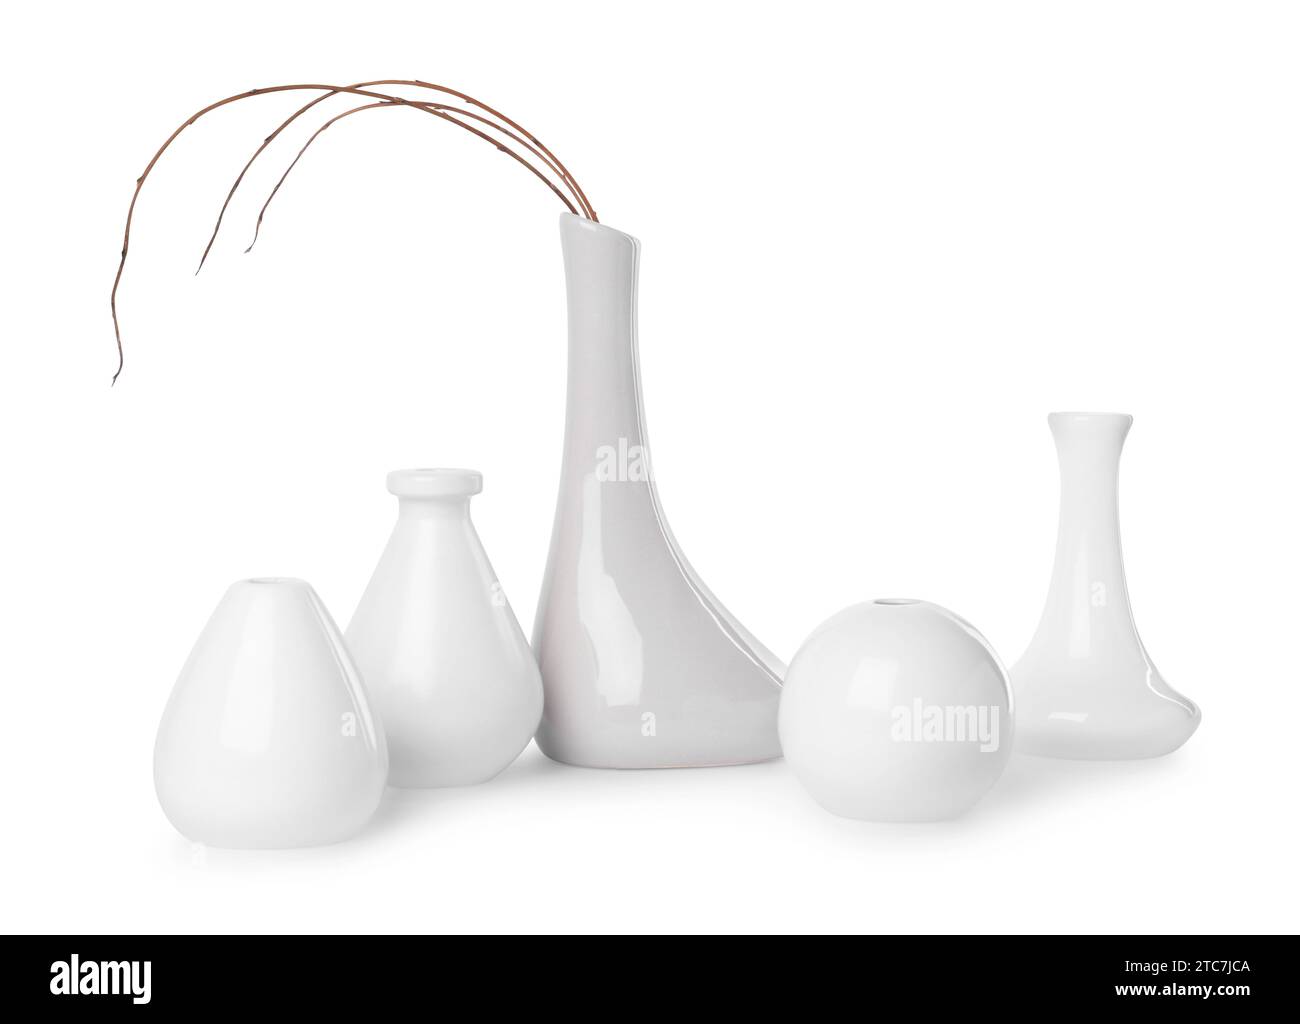 Many different stylish vases on white background Stock Photo